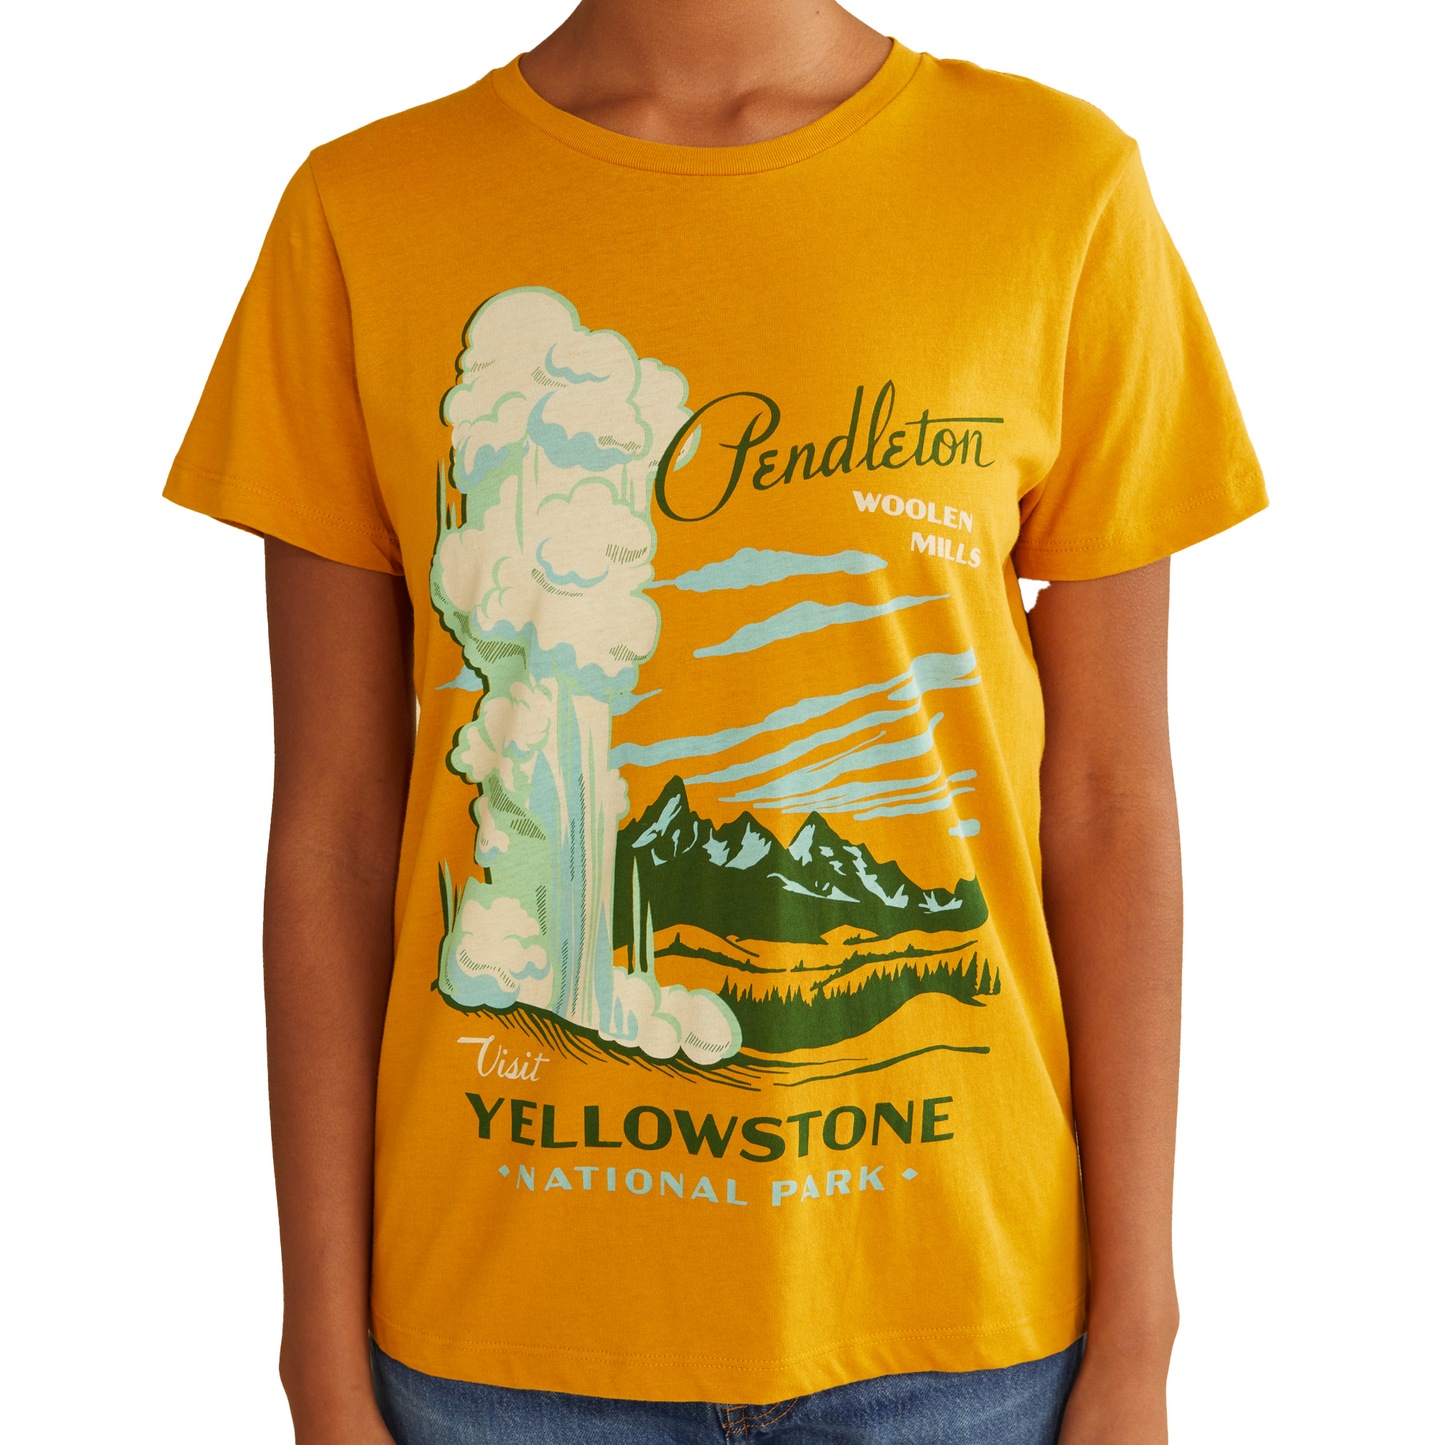 Pendleton Women's Heritage Yellowstone Park Tee - Gold/Green